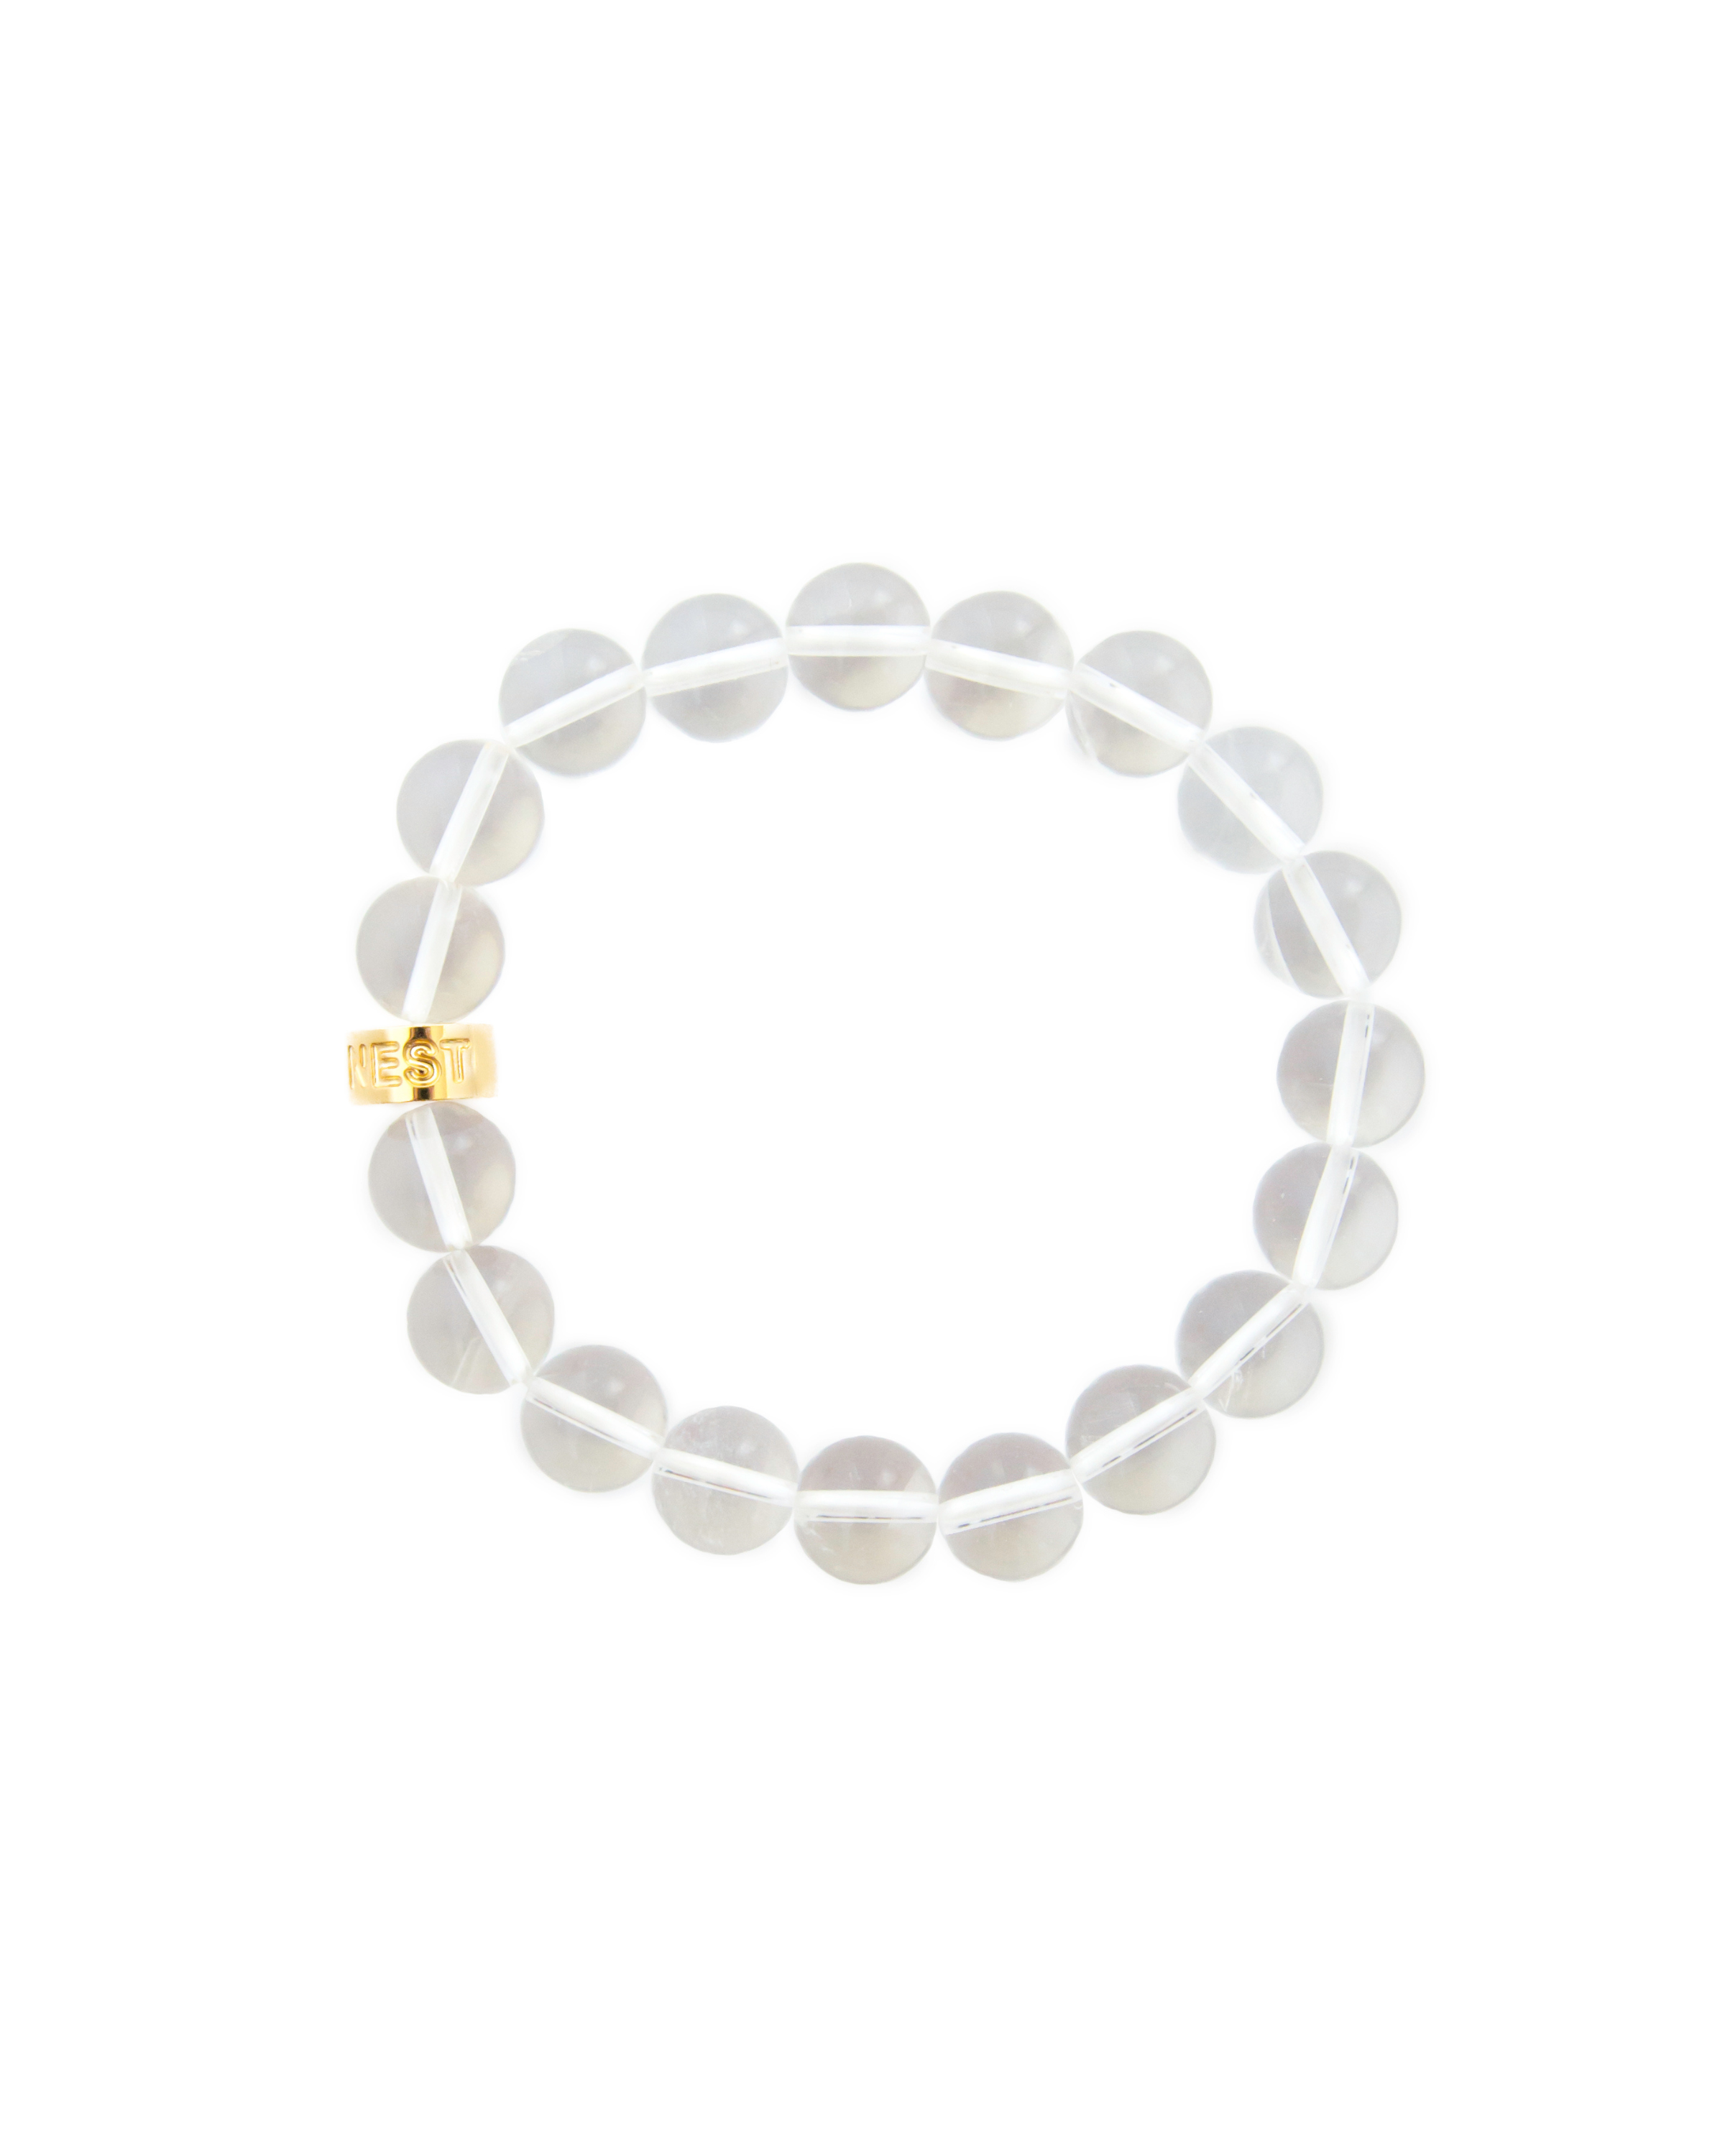 100%Natural Crystal Beads Bracelets Quartz Natural Stone Streche Brace